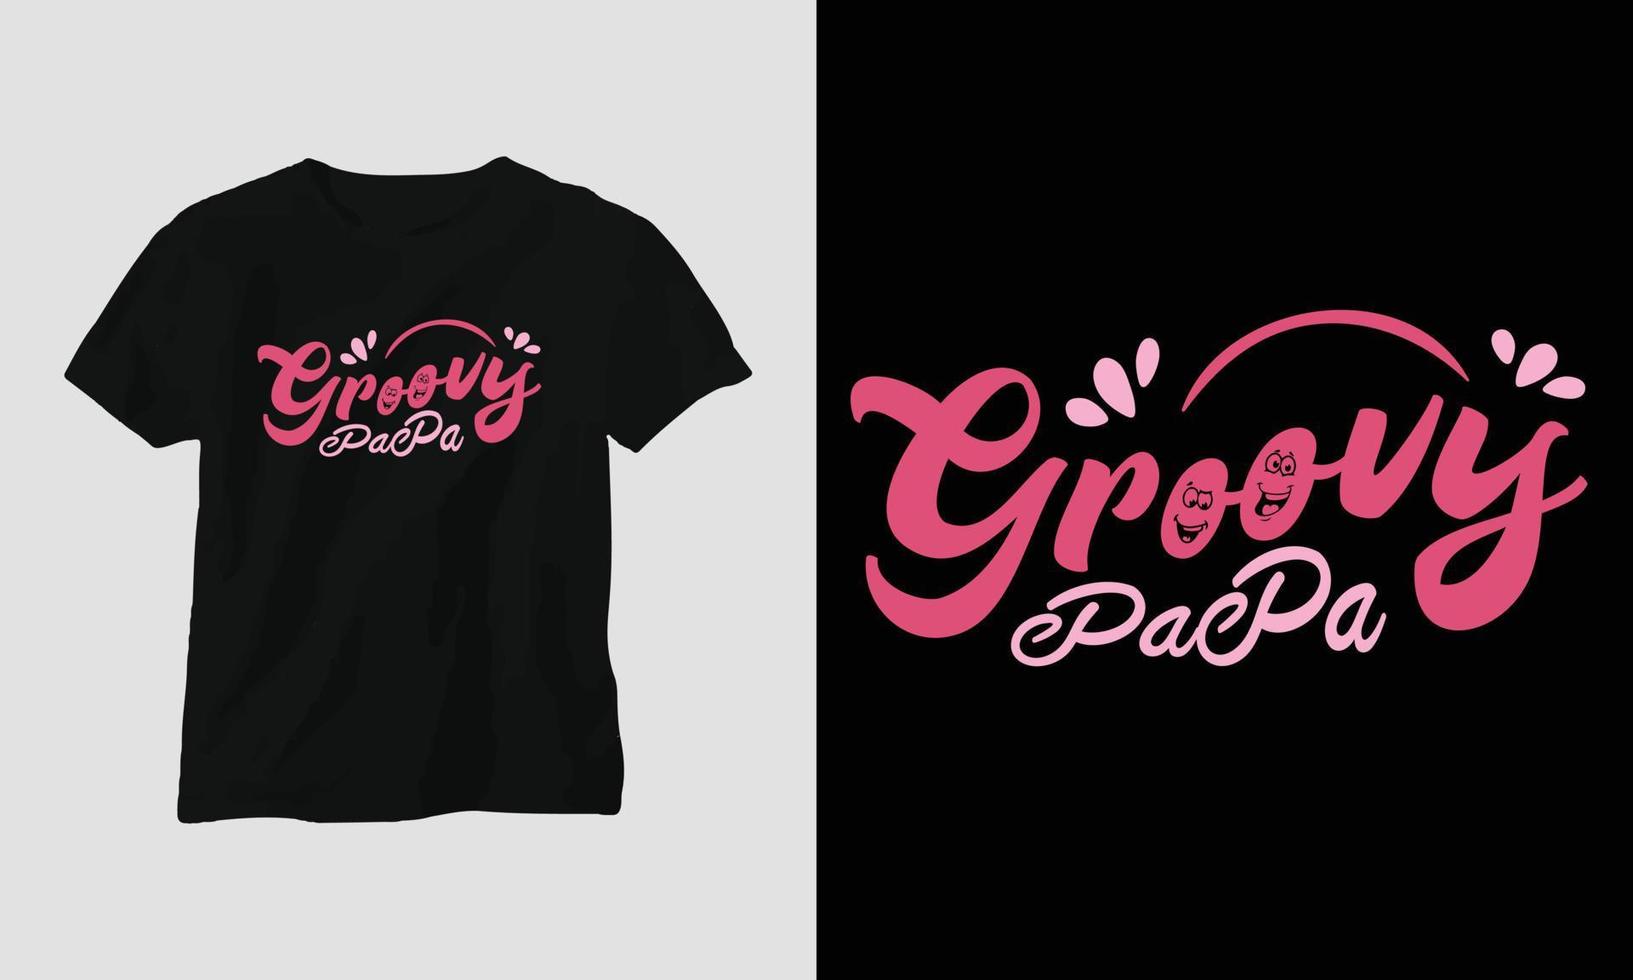 Wavy Retro Groovy T-shirt Design. vector Graphic Design T-Shirt, mag, sticker, wall mat, etc. Design vector Graphic Template